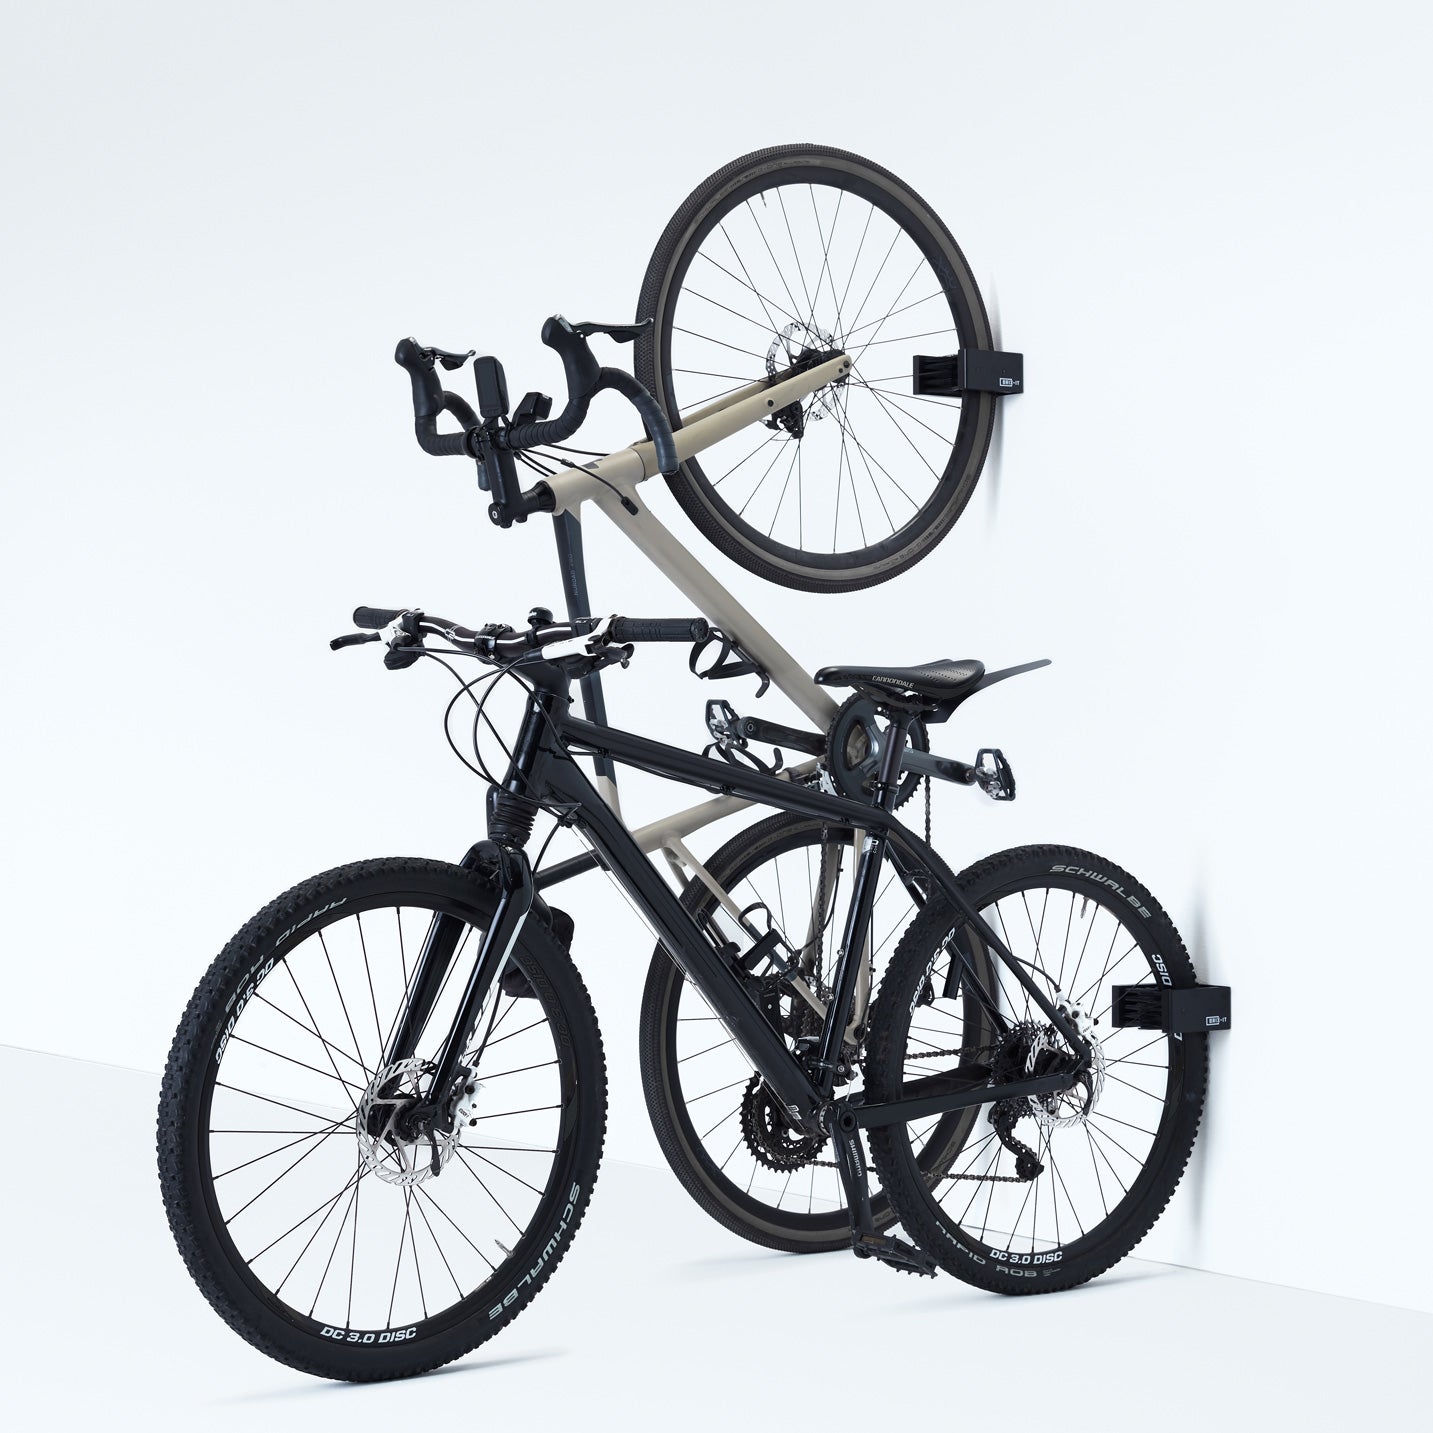 BRIX-IT – Bike Rack (made by friends)